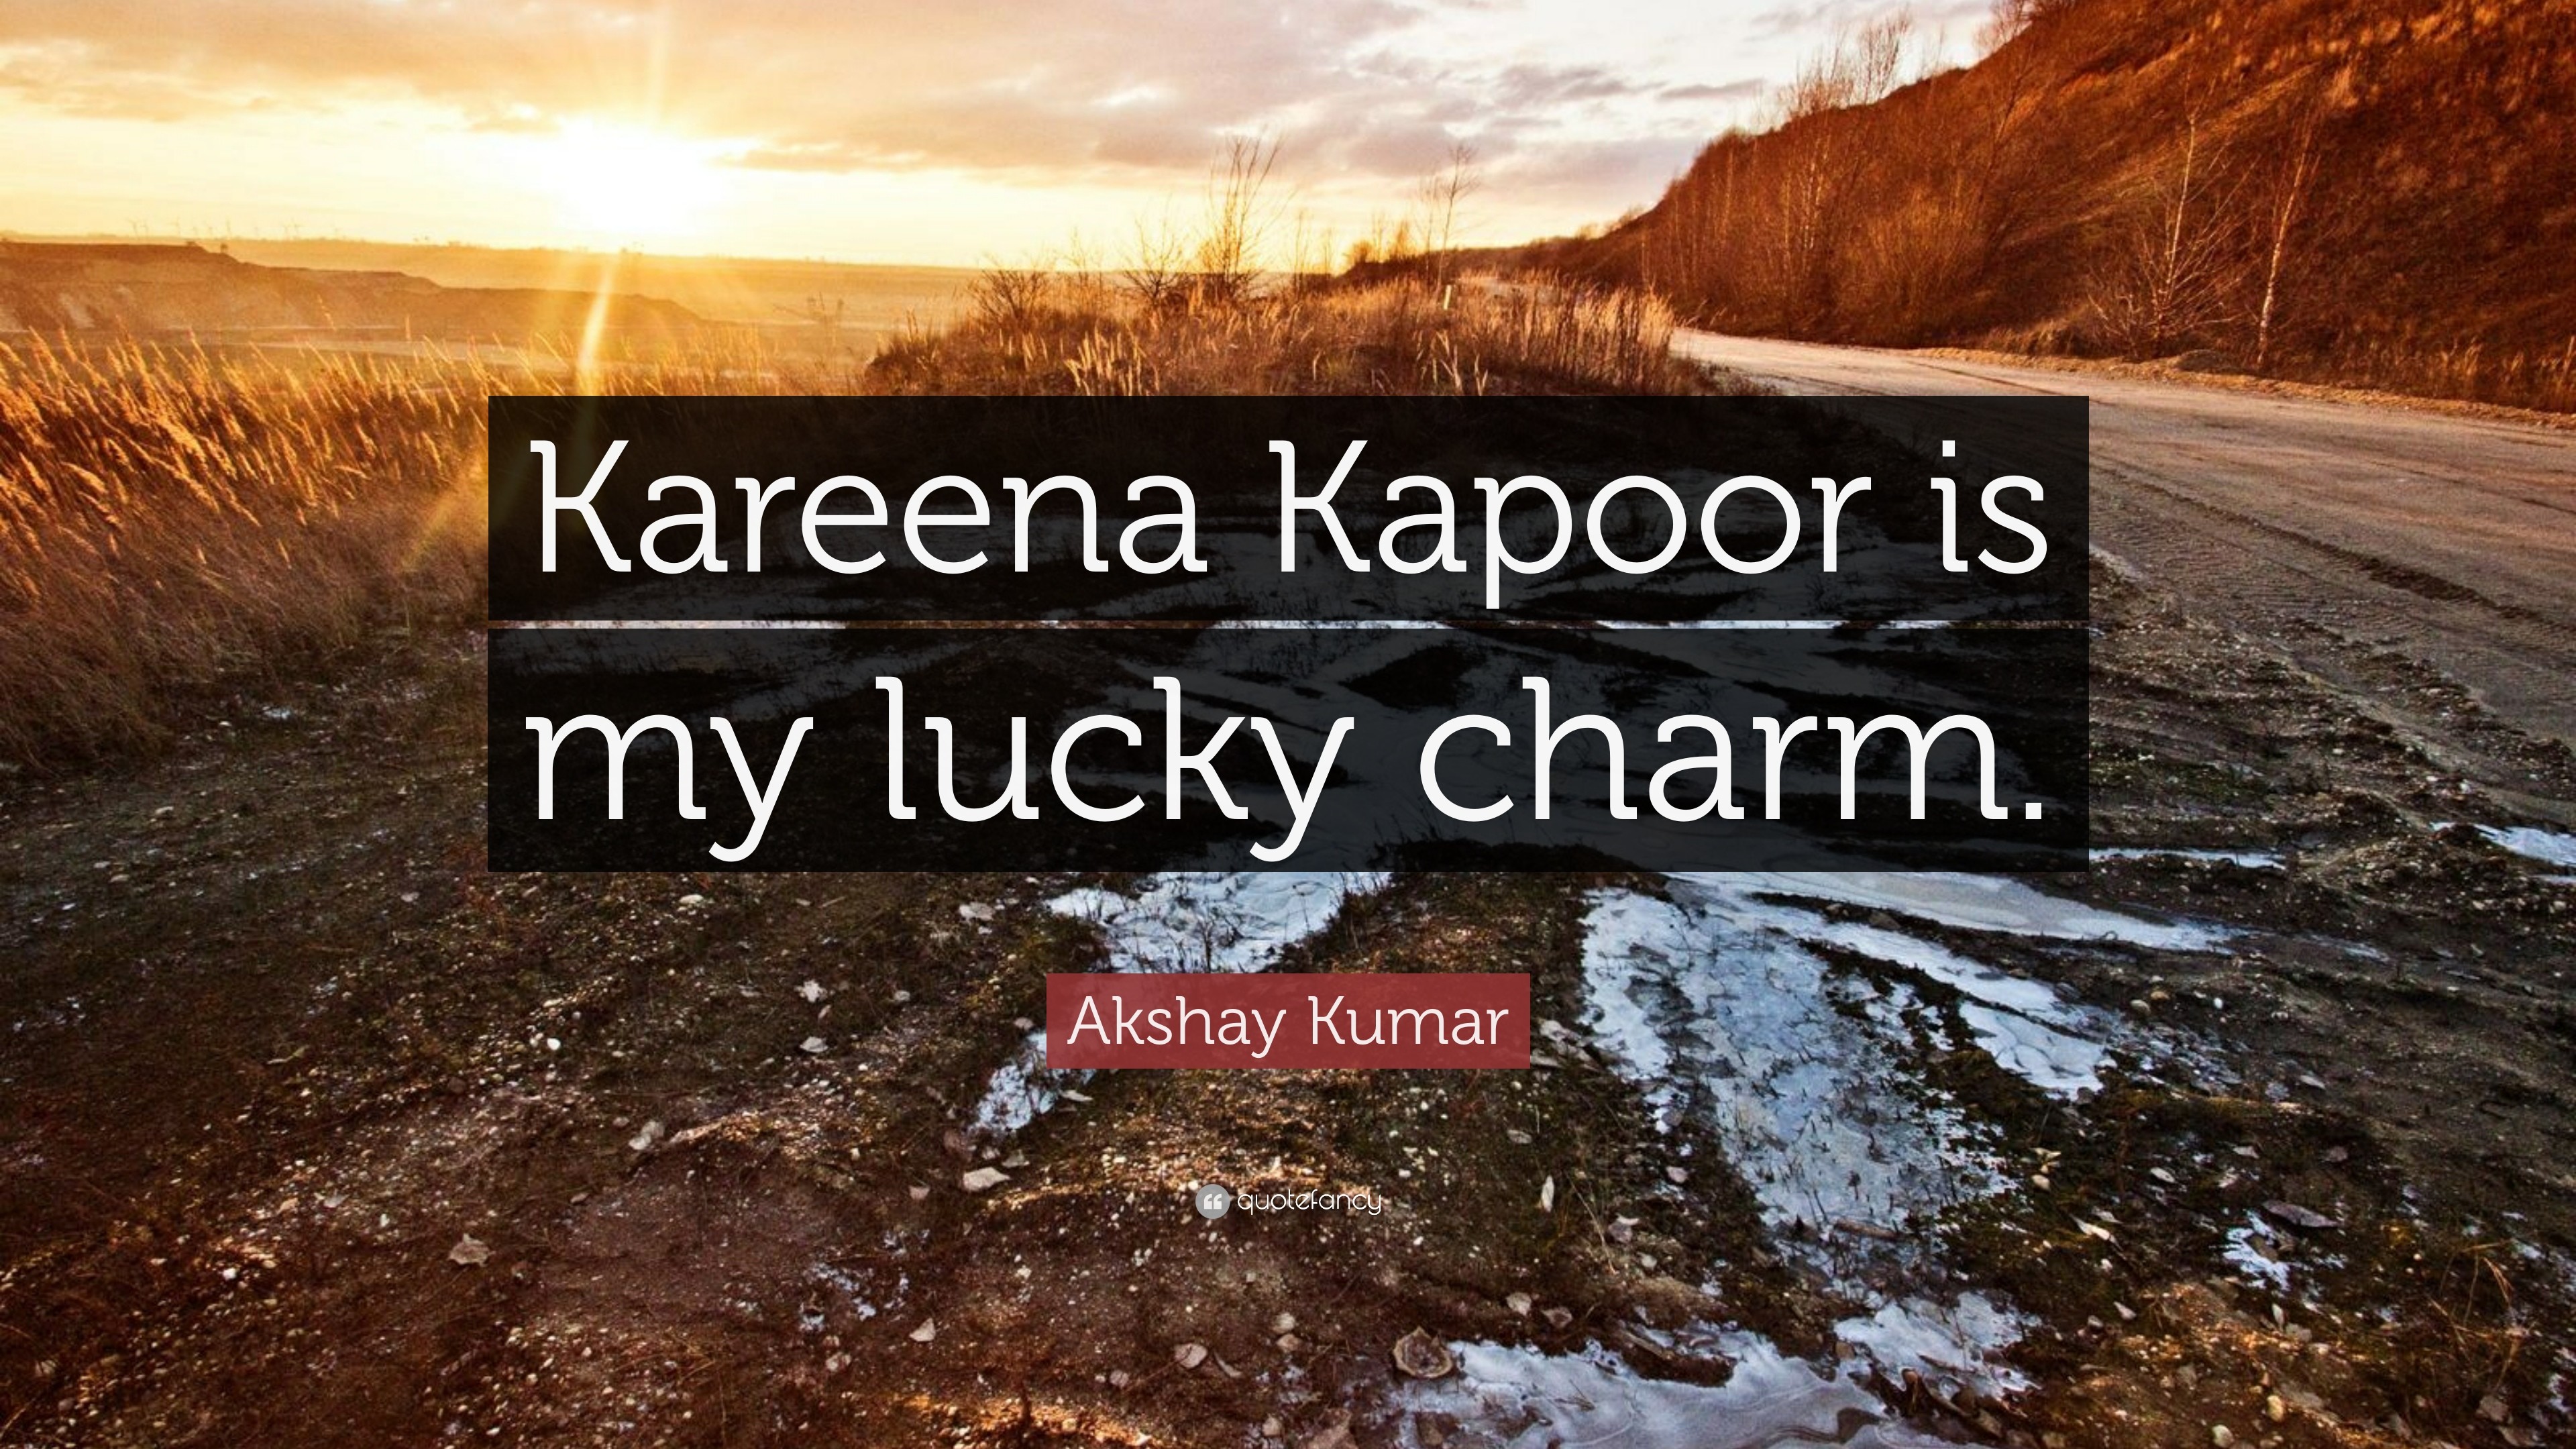 3840x2160 Akshay Kumar Quote: “Kareena Kapoor is my lucky charm.”